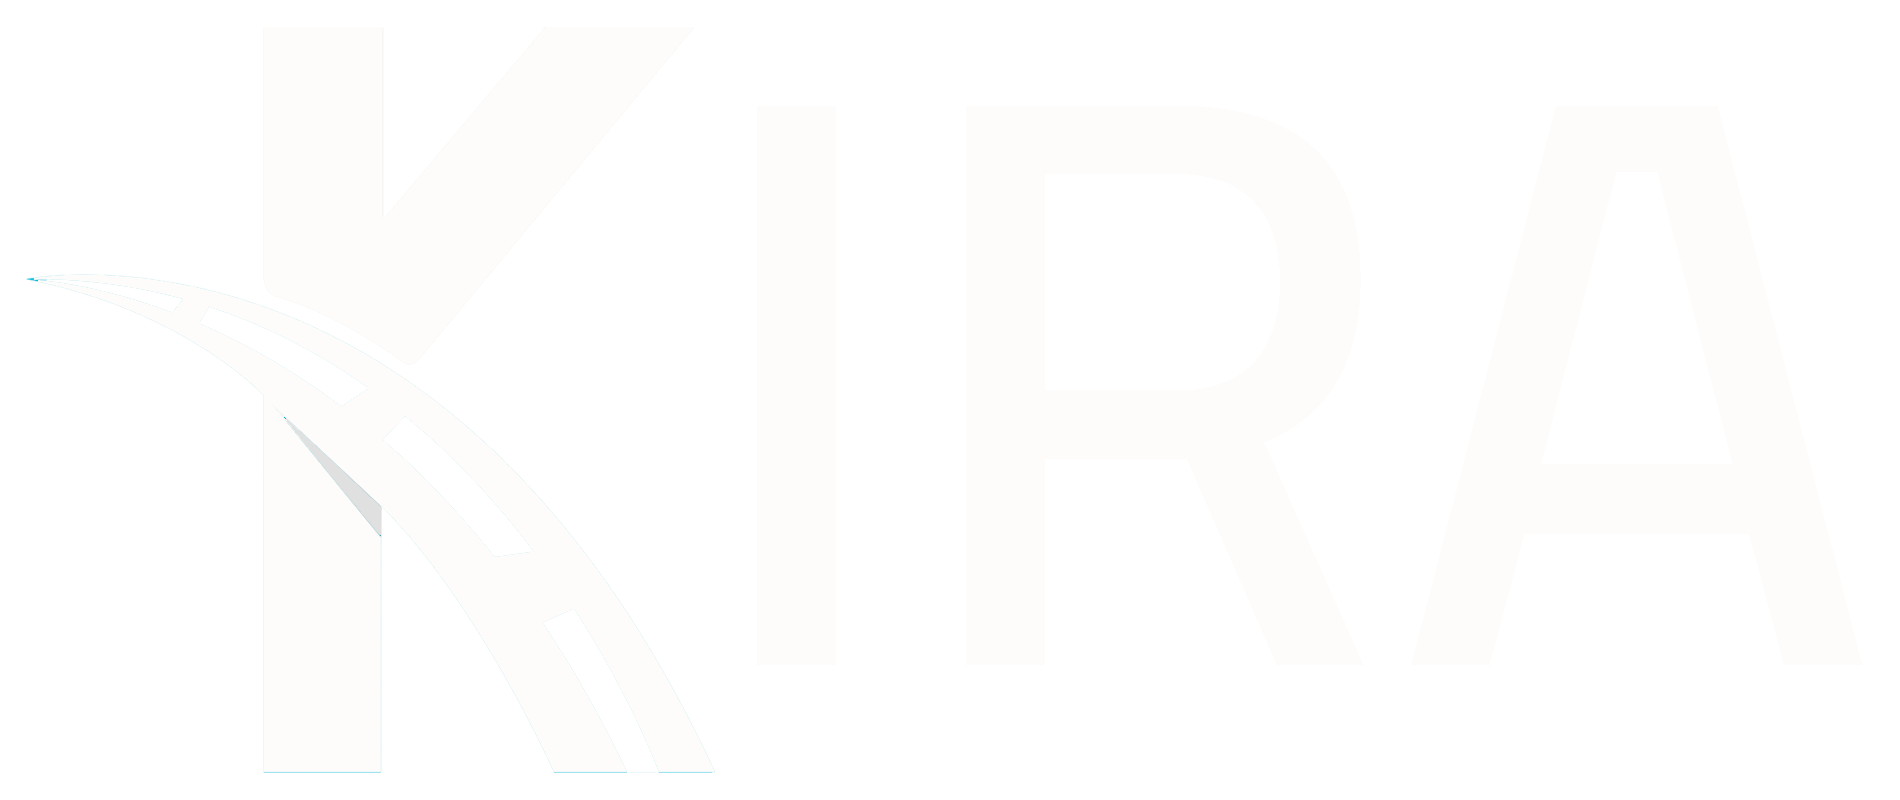 KIRA Rental Cars